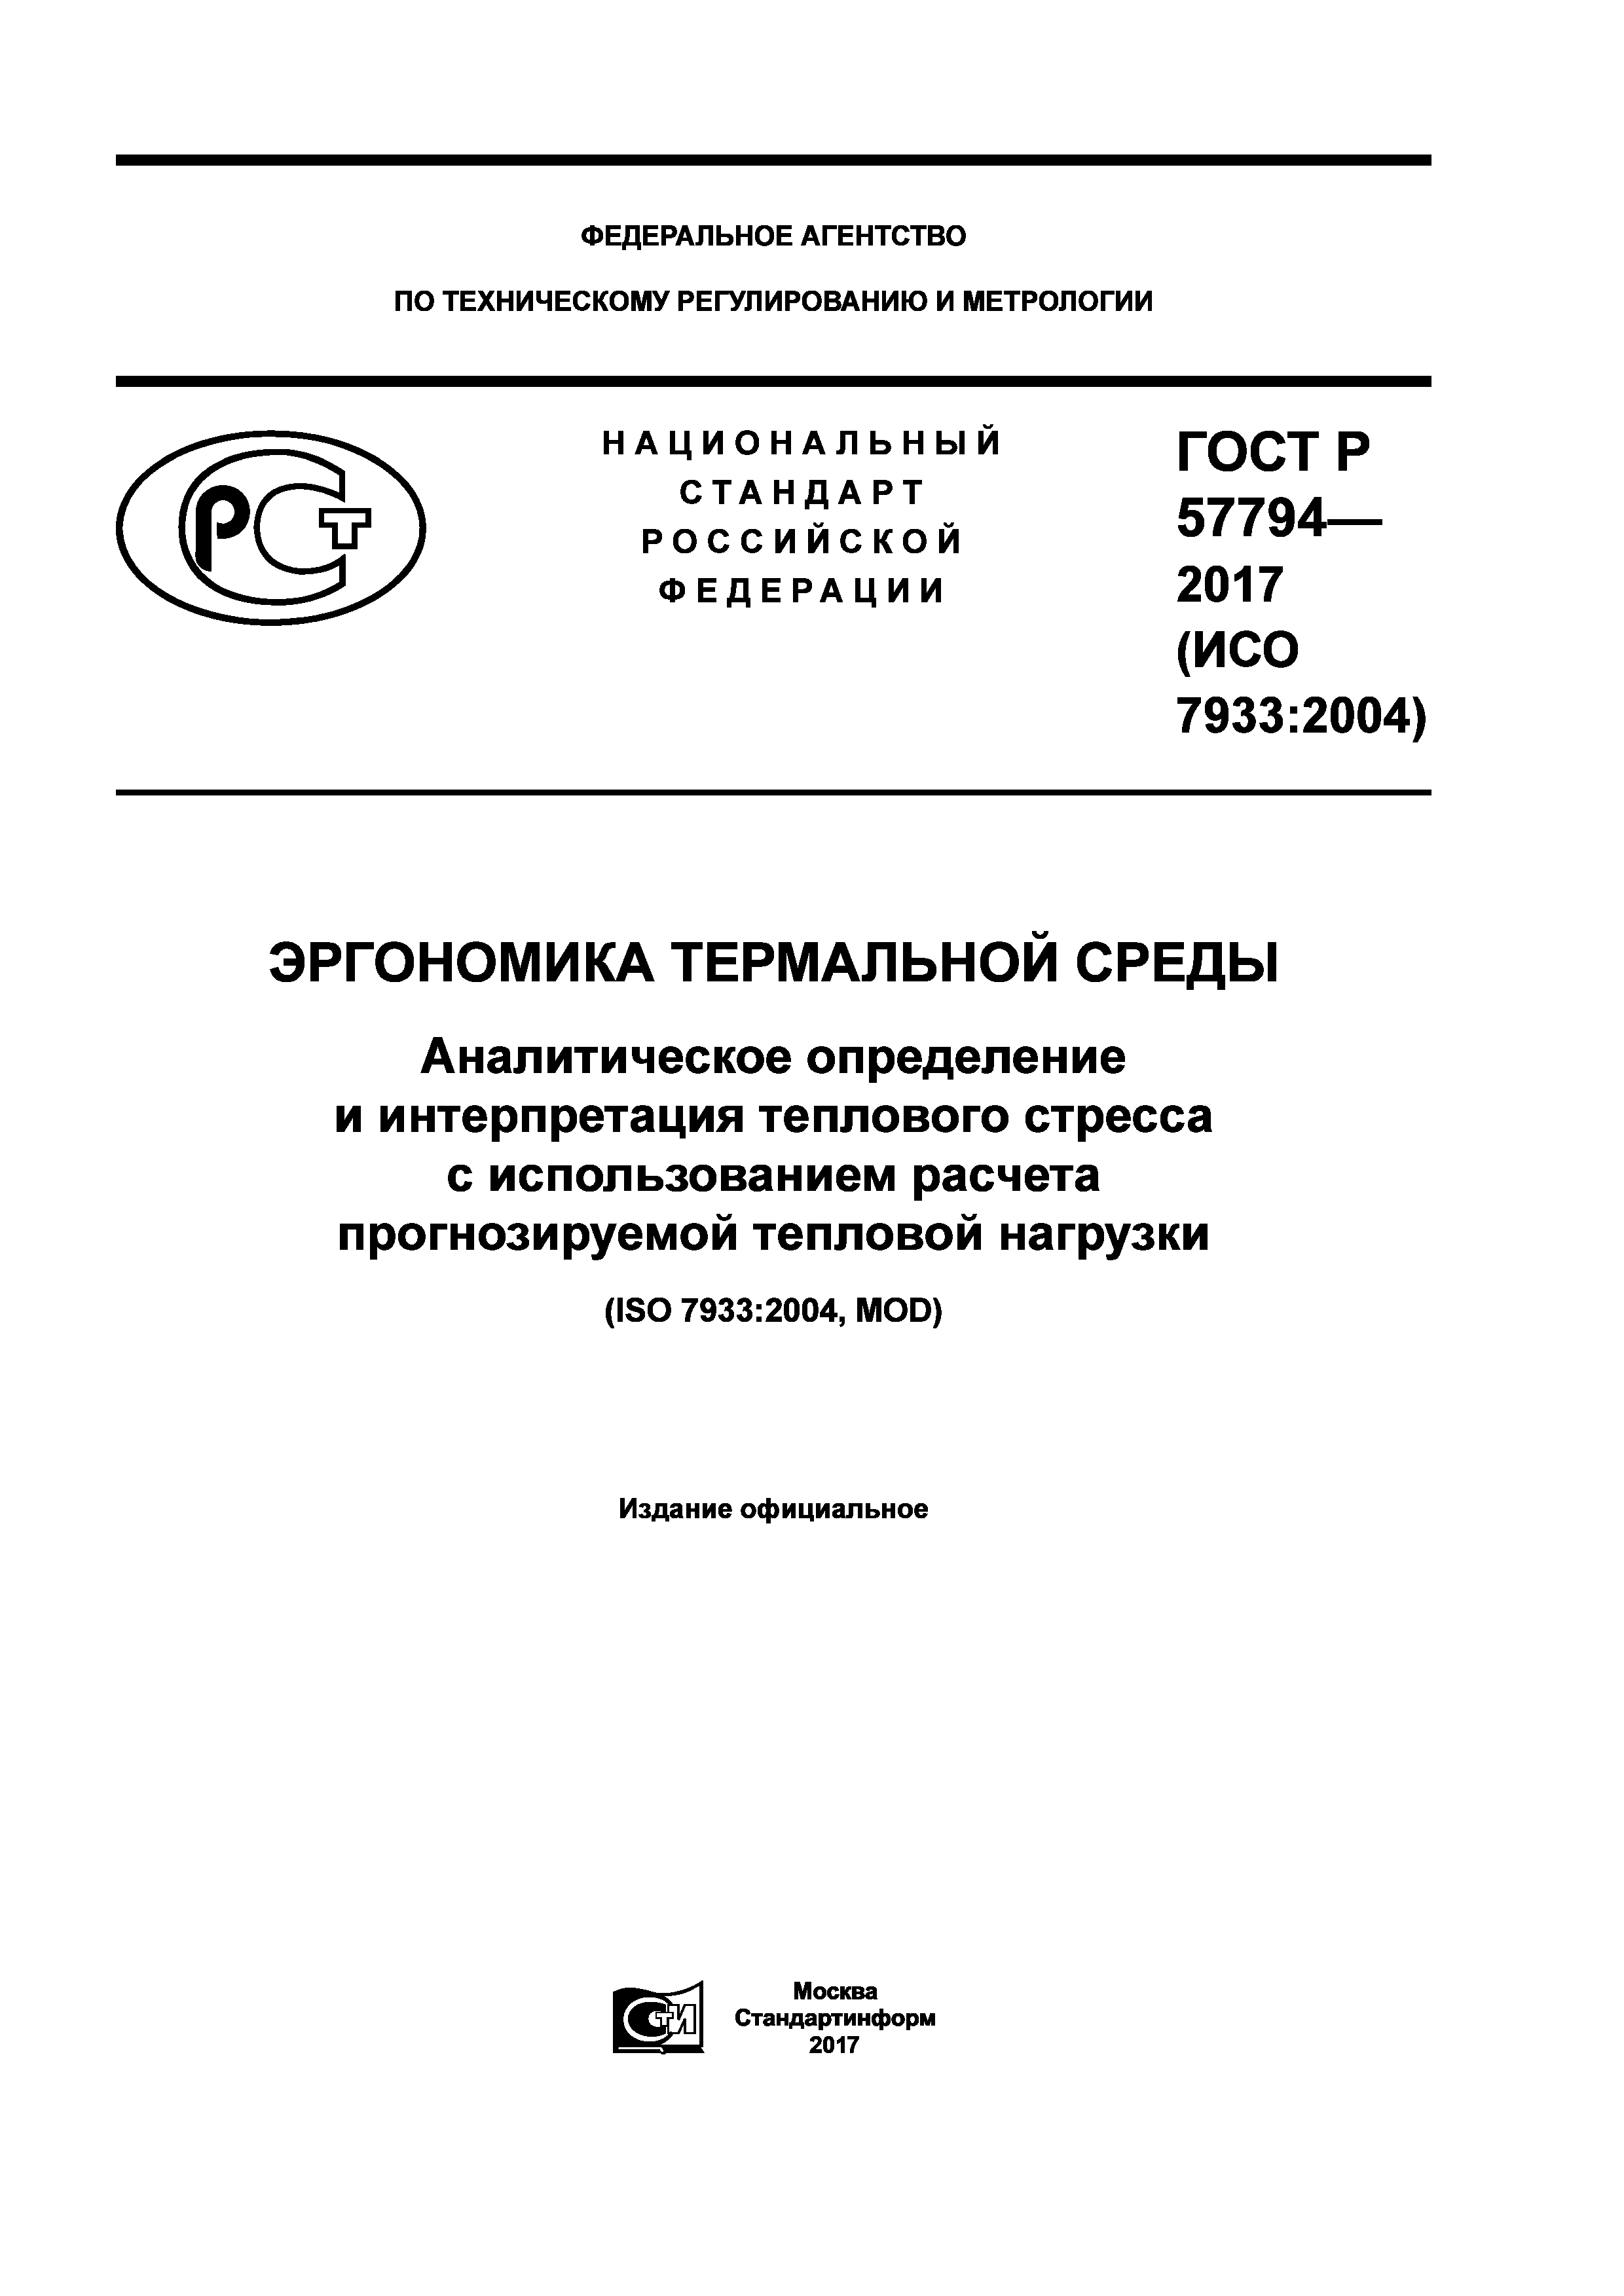 ГОСТ Р 57794-2017